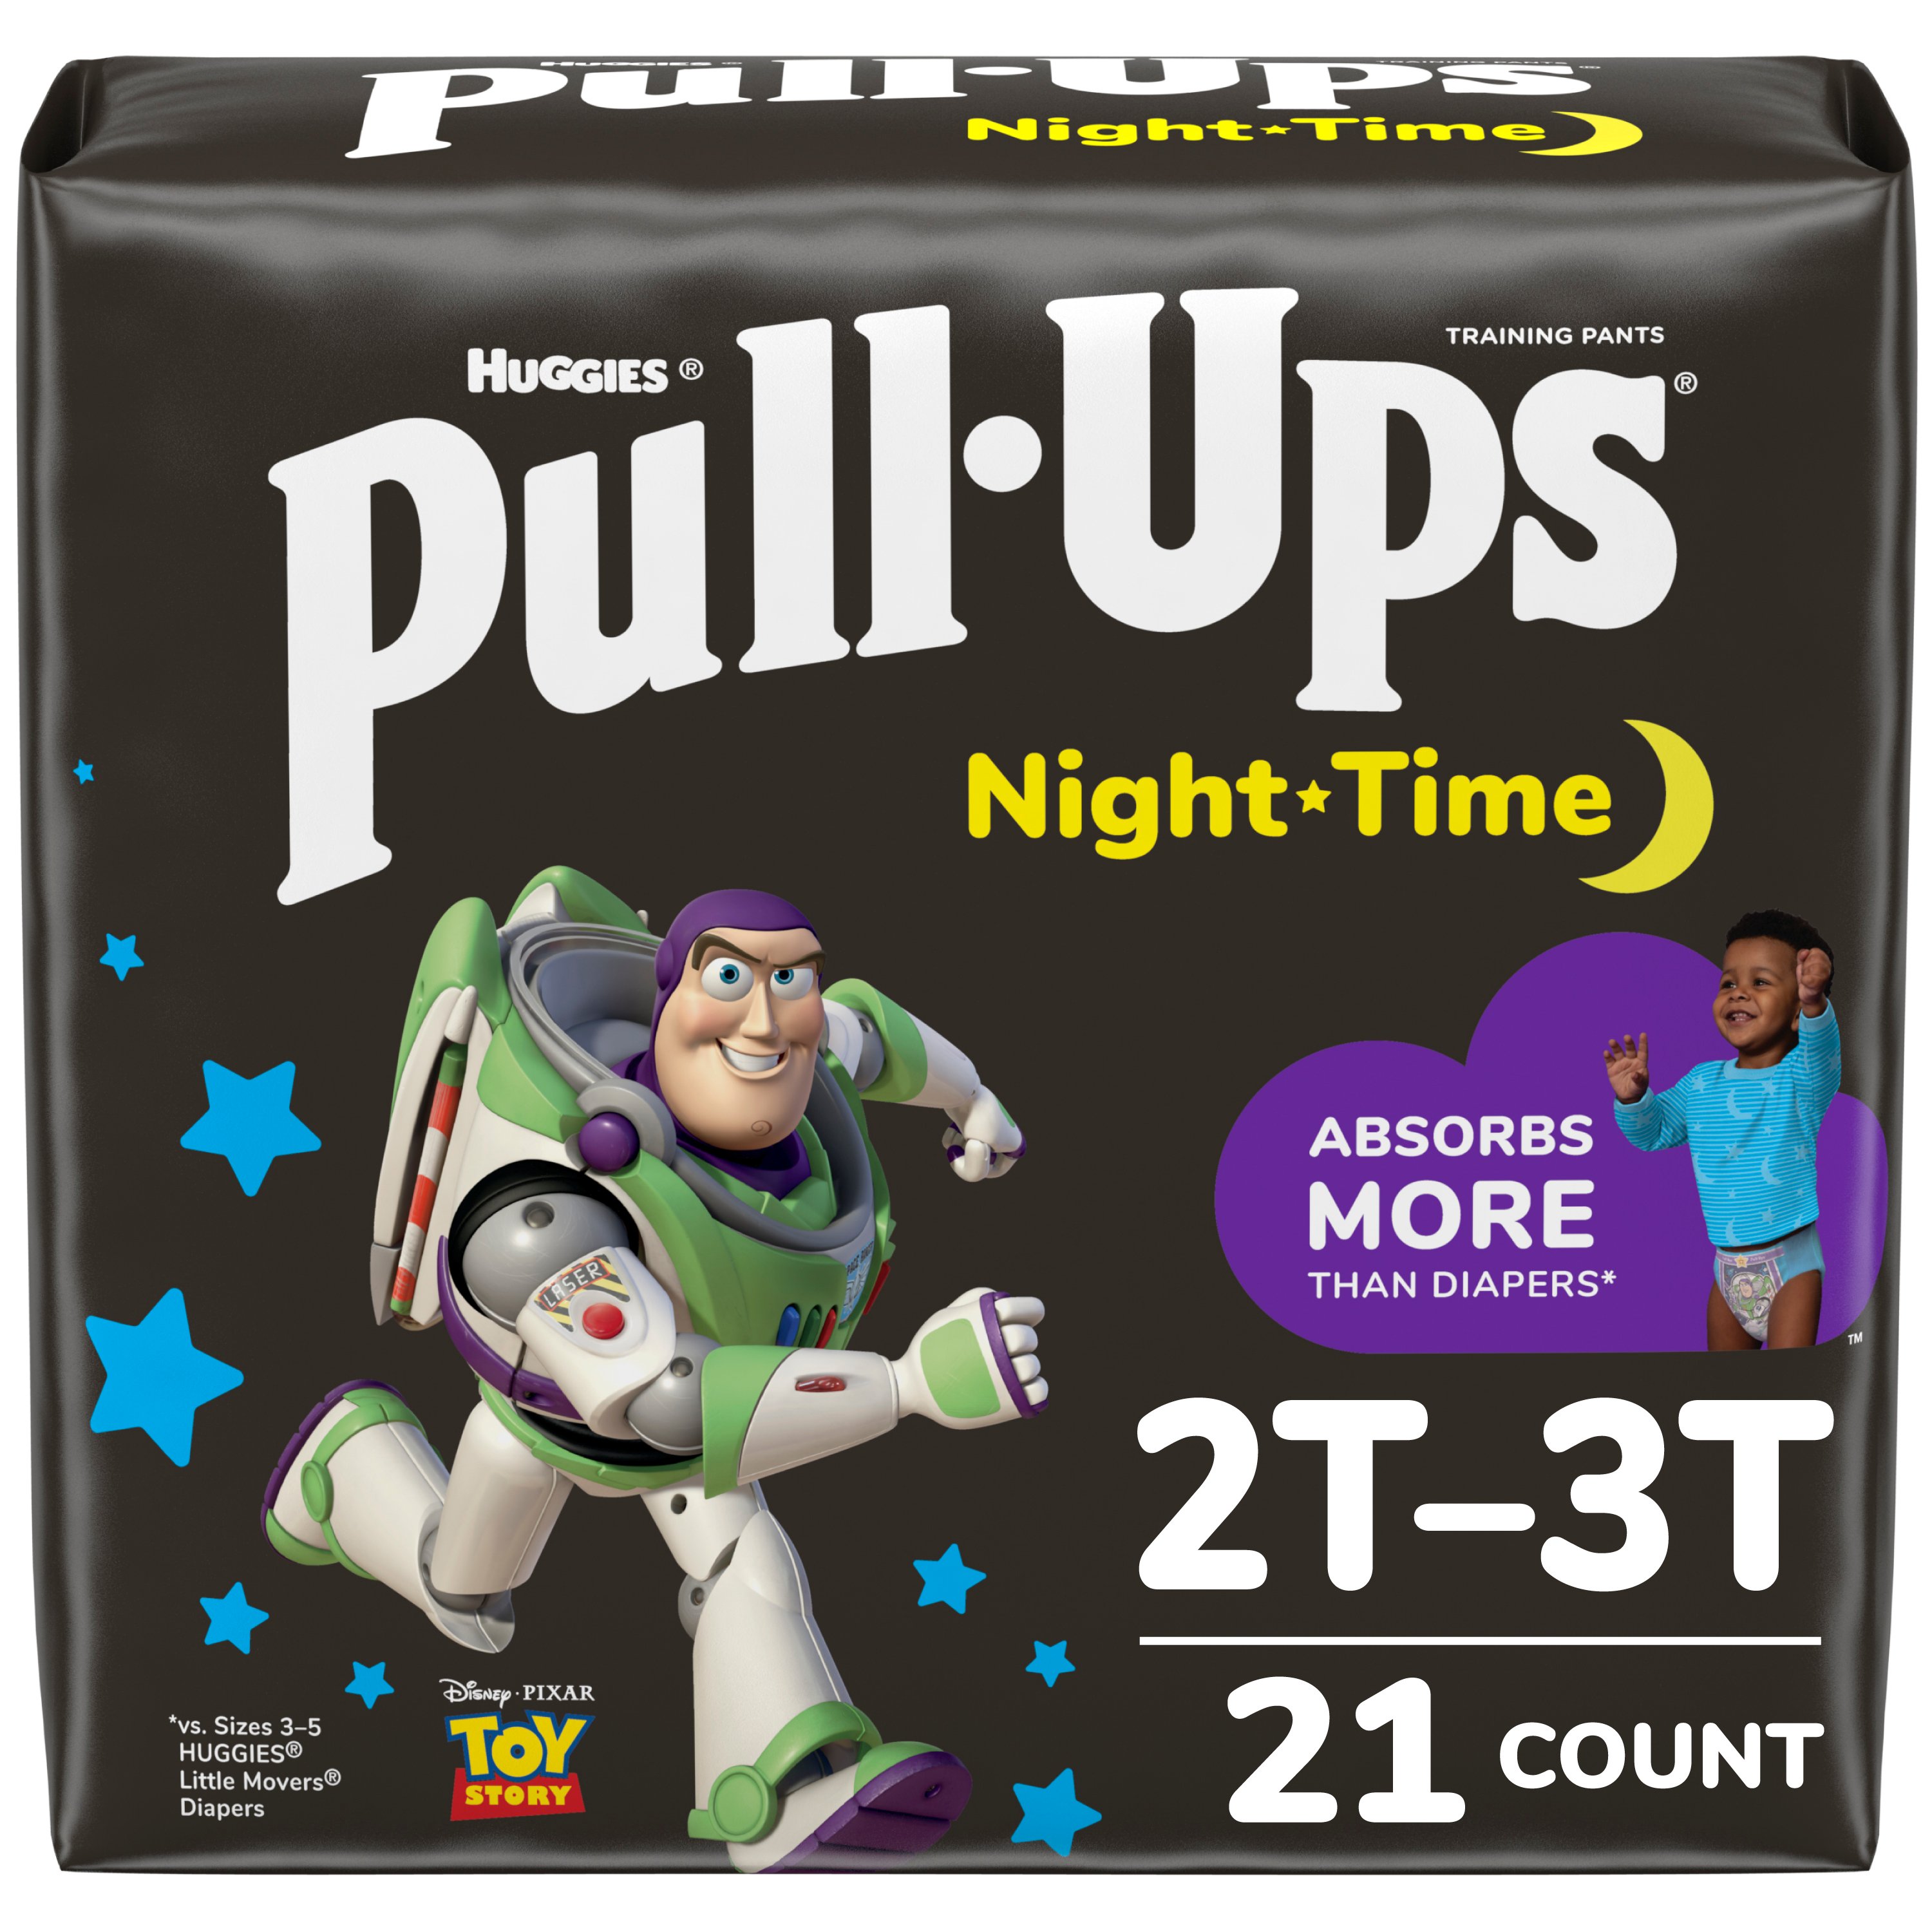 Pull Ups Night-Time Nighttime Big Pack Training Pants Boys, 44 Count - Shop  Training Pants at H-E-B